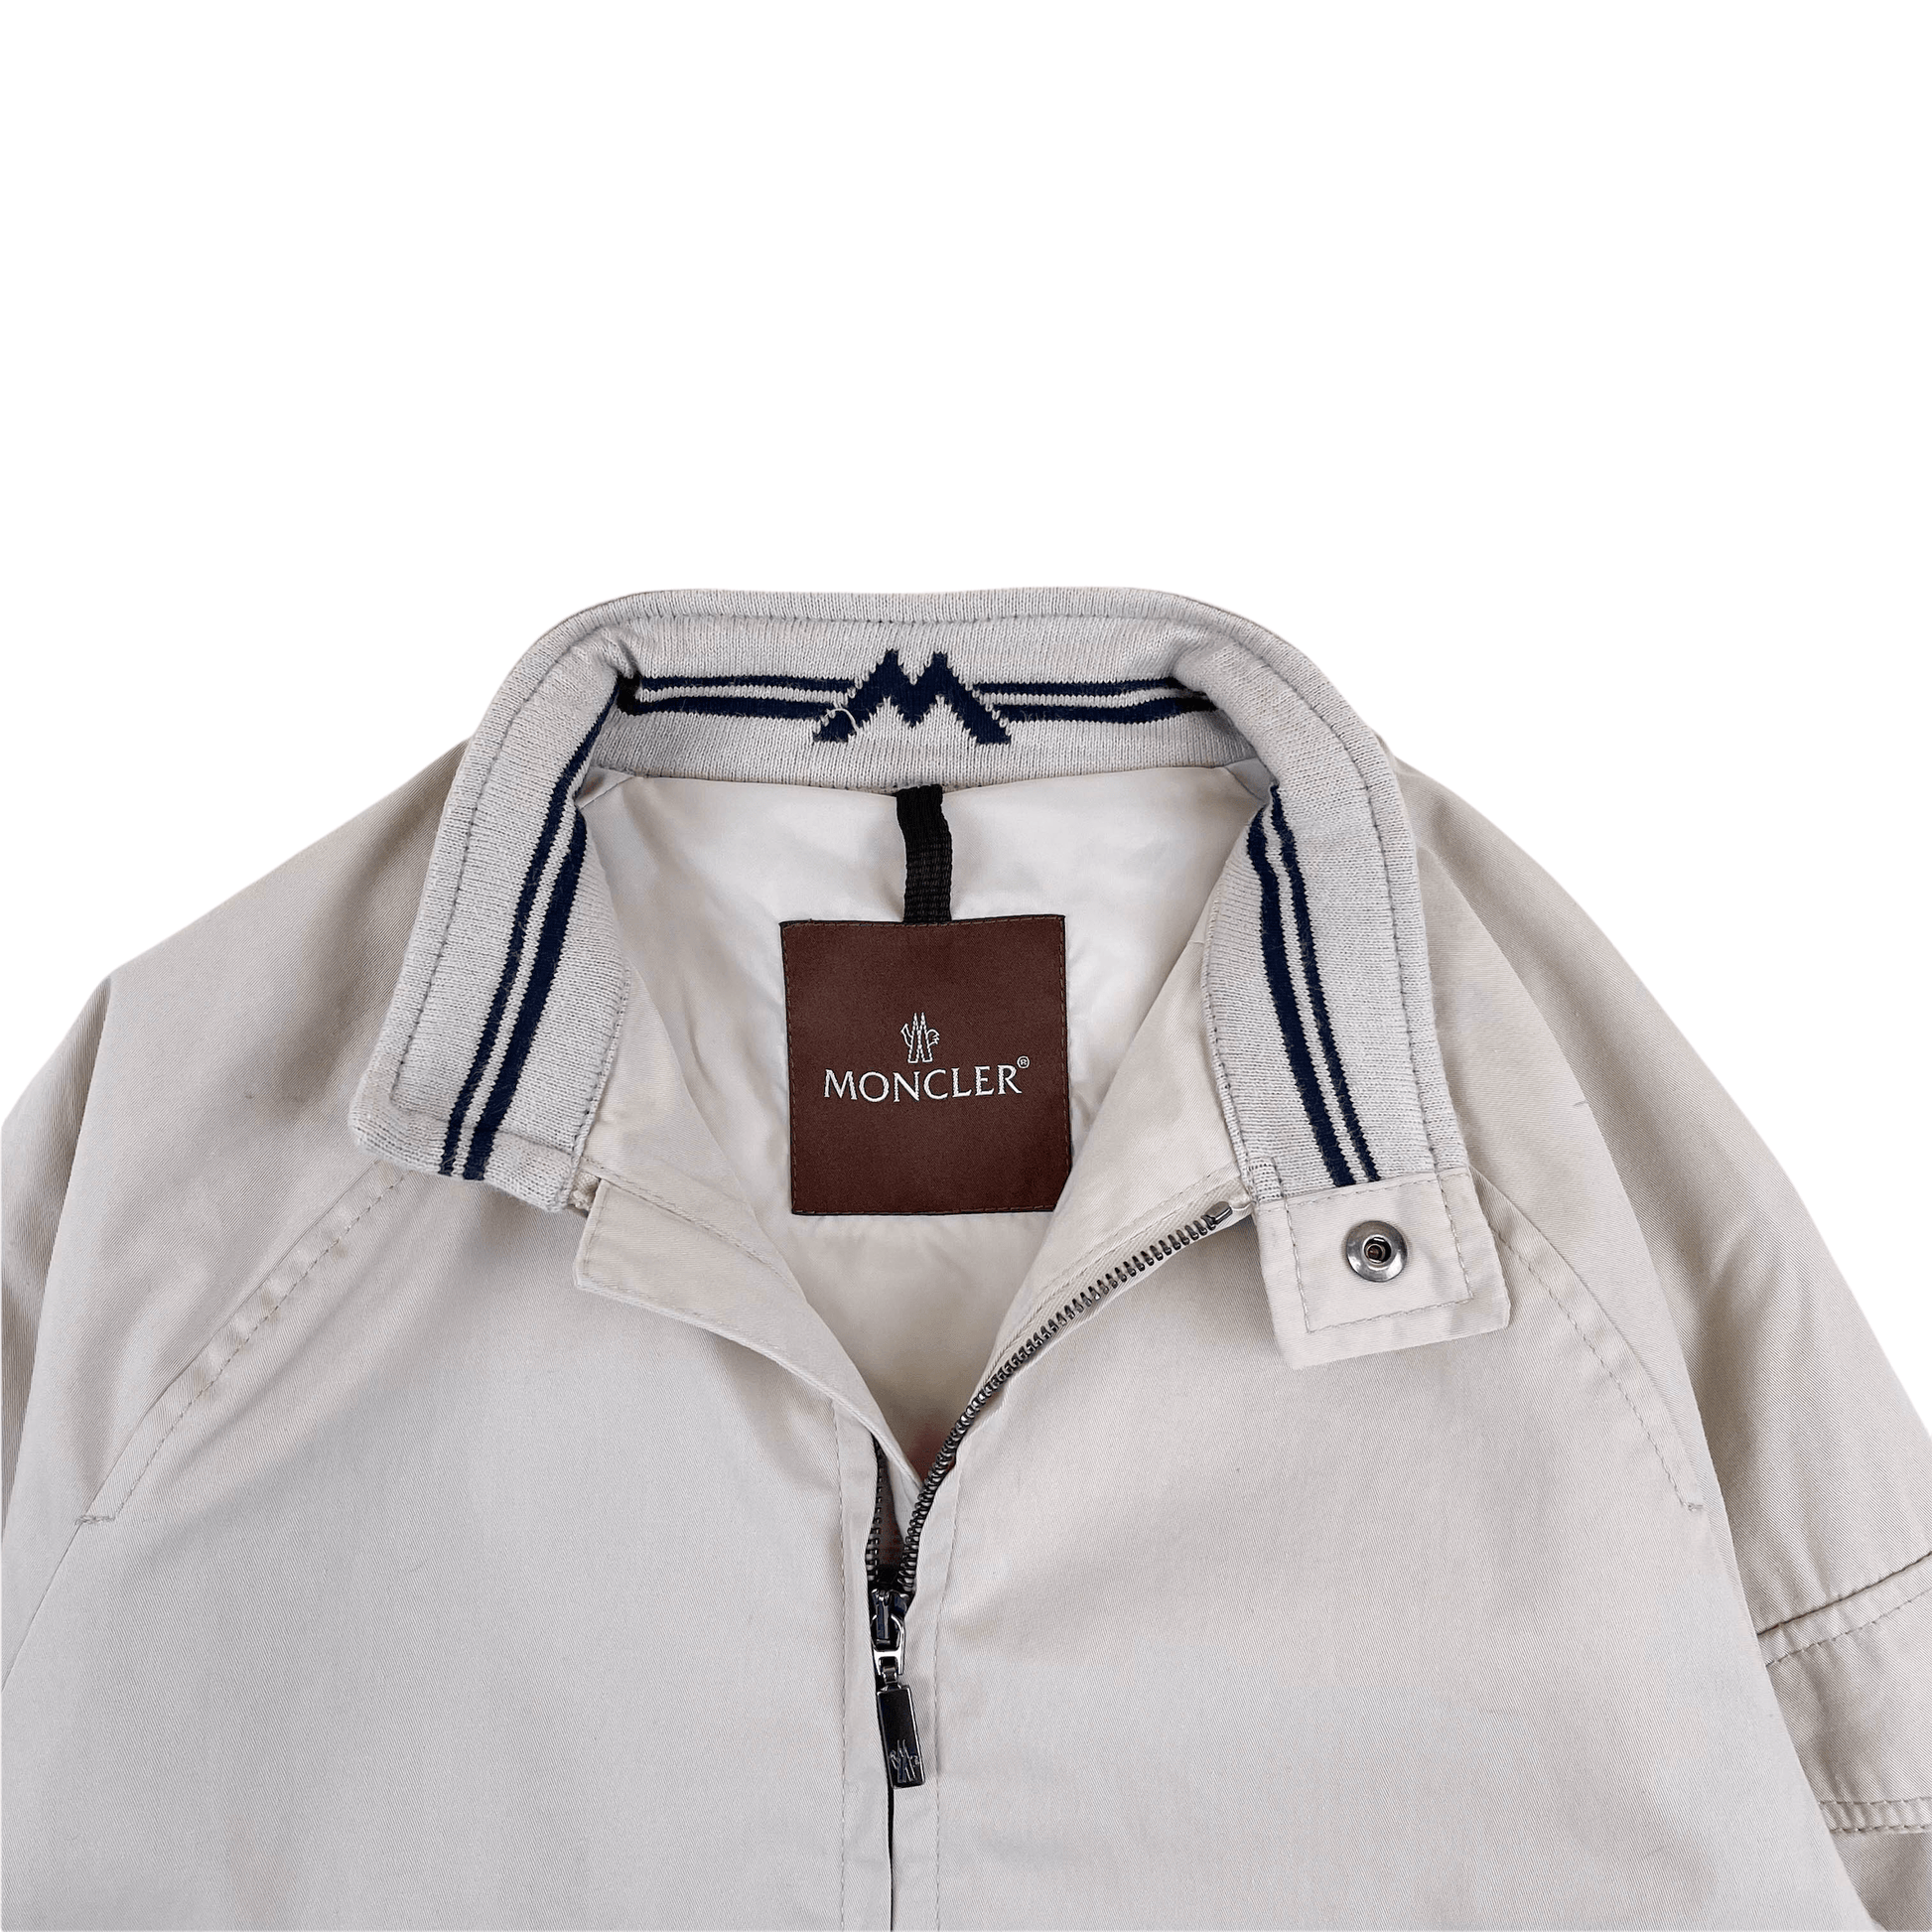 Vintage Moncler Jacket (S) - Known Source